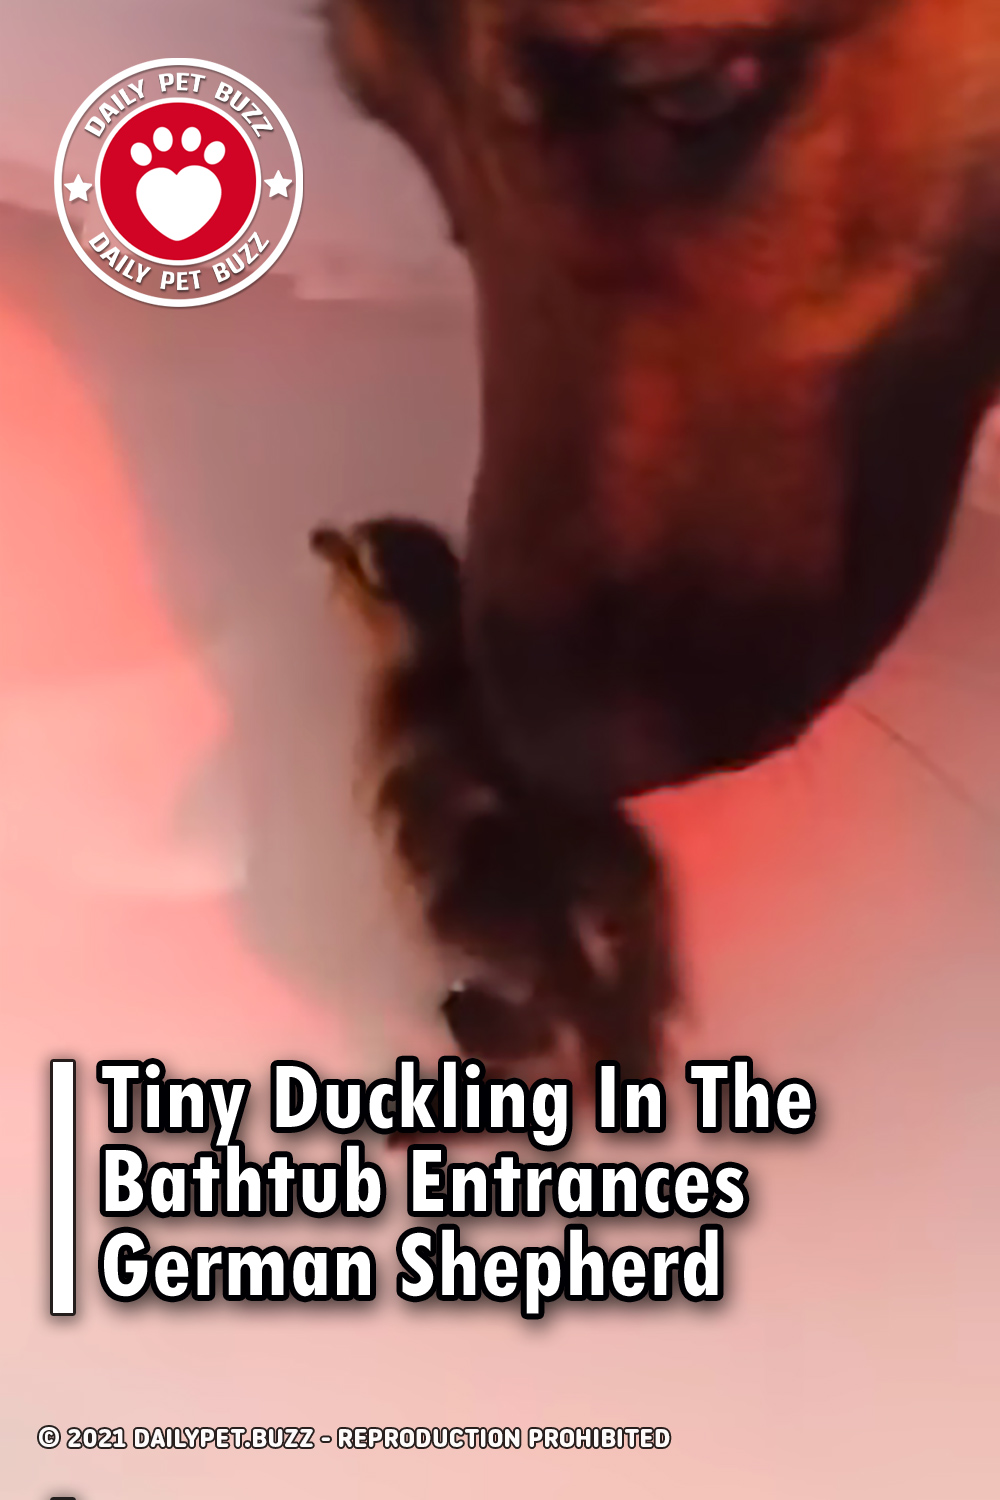 Tiny Duckling In The Bathtub Entrances German Shepherd